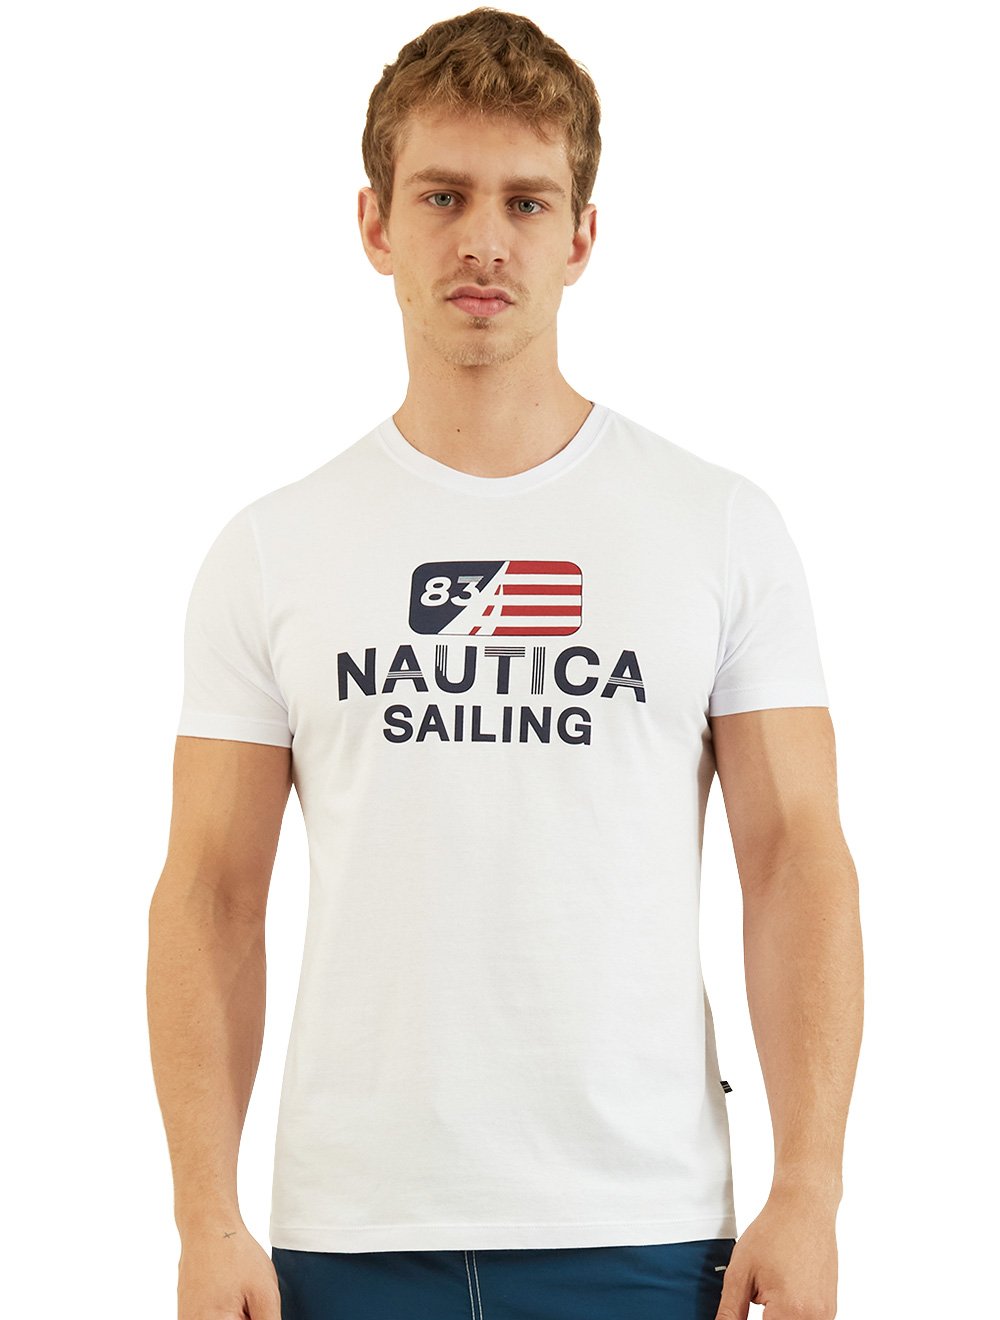 Camiseta Nautica Masculina Sailing 83 Icon Flag Branca